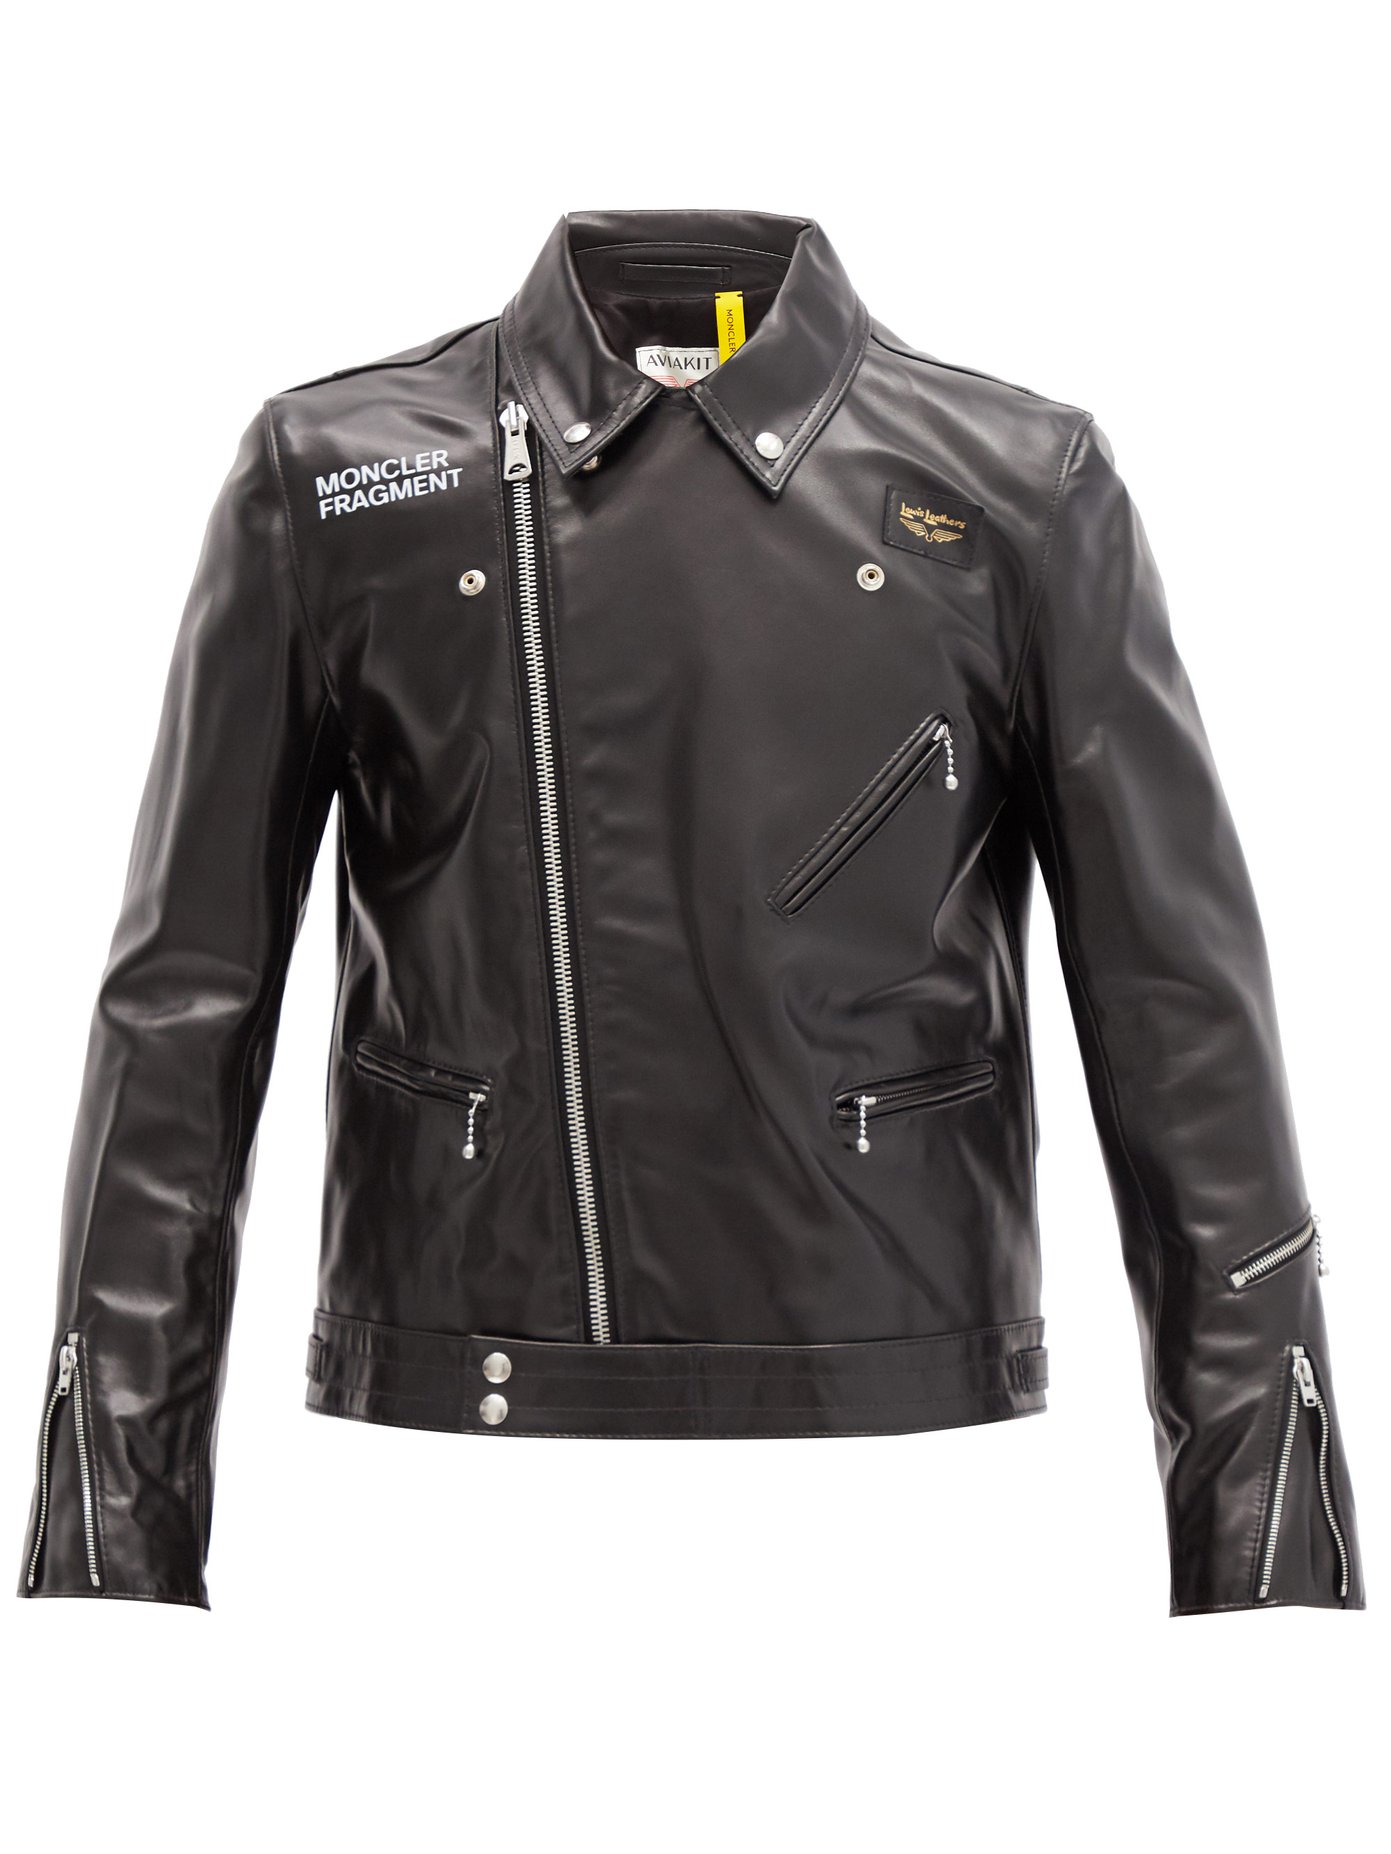 moncler motorcycle jacket